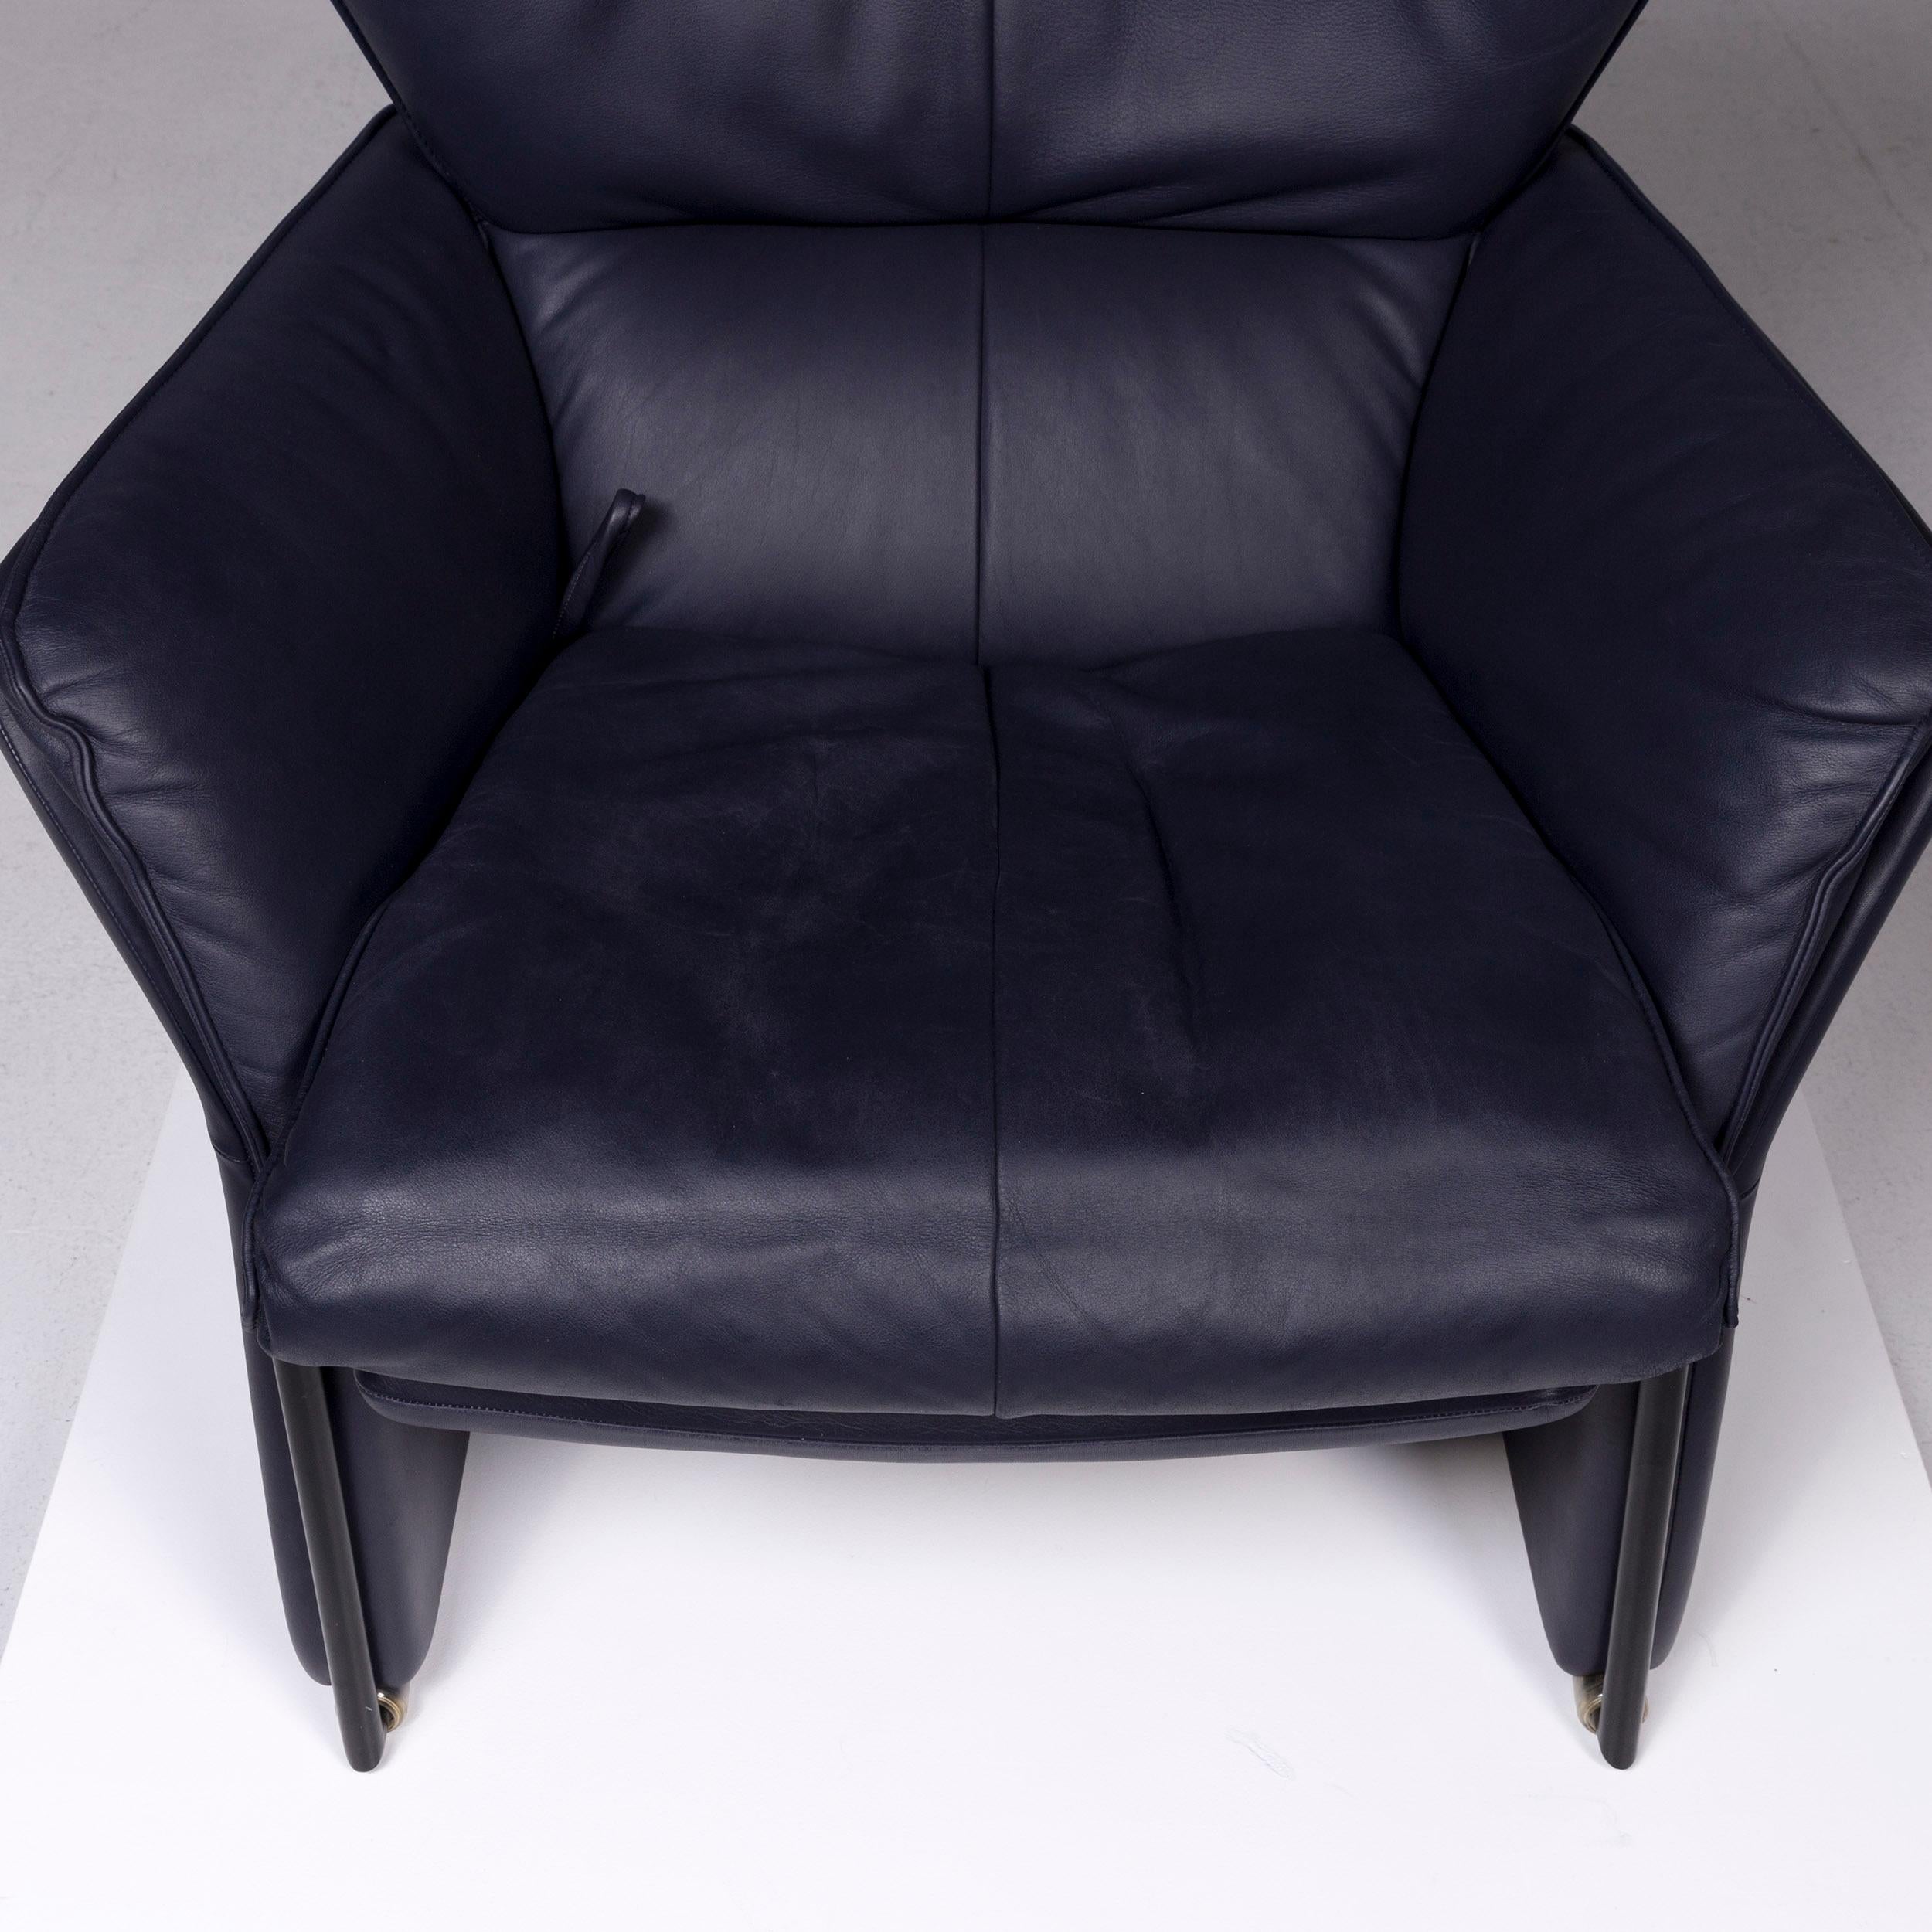 Swiss FSM Unus Leather Armchair Blue Dark Blue Relaxation Function For Sale